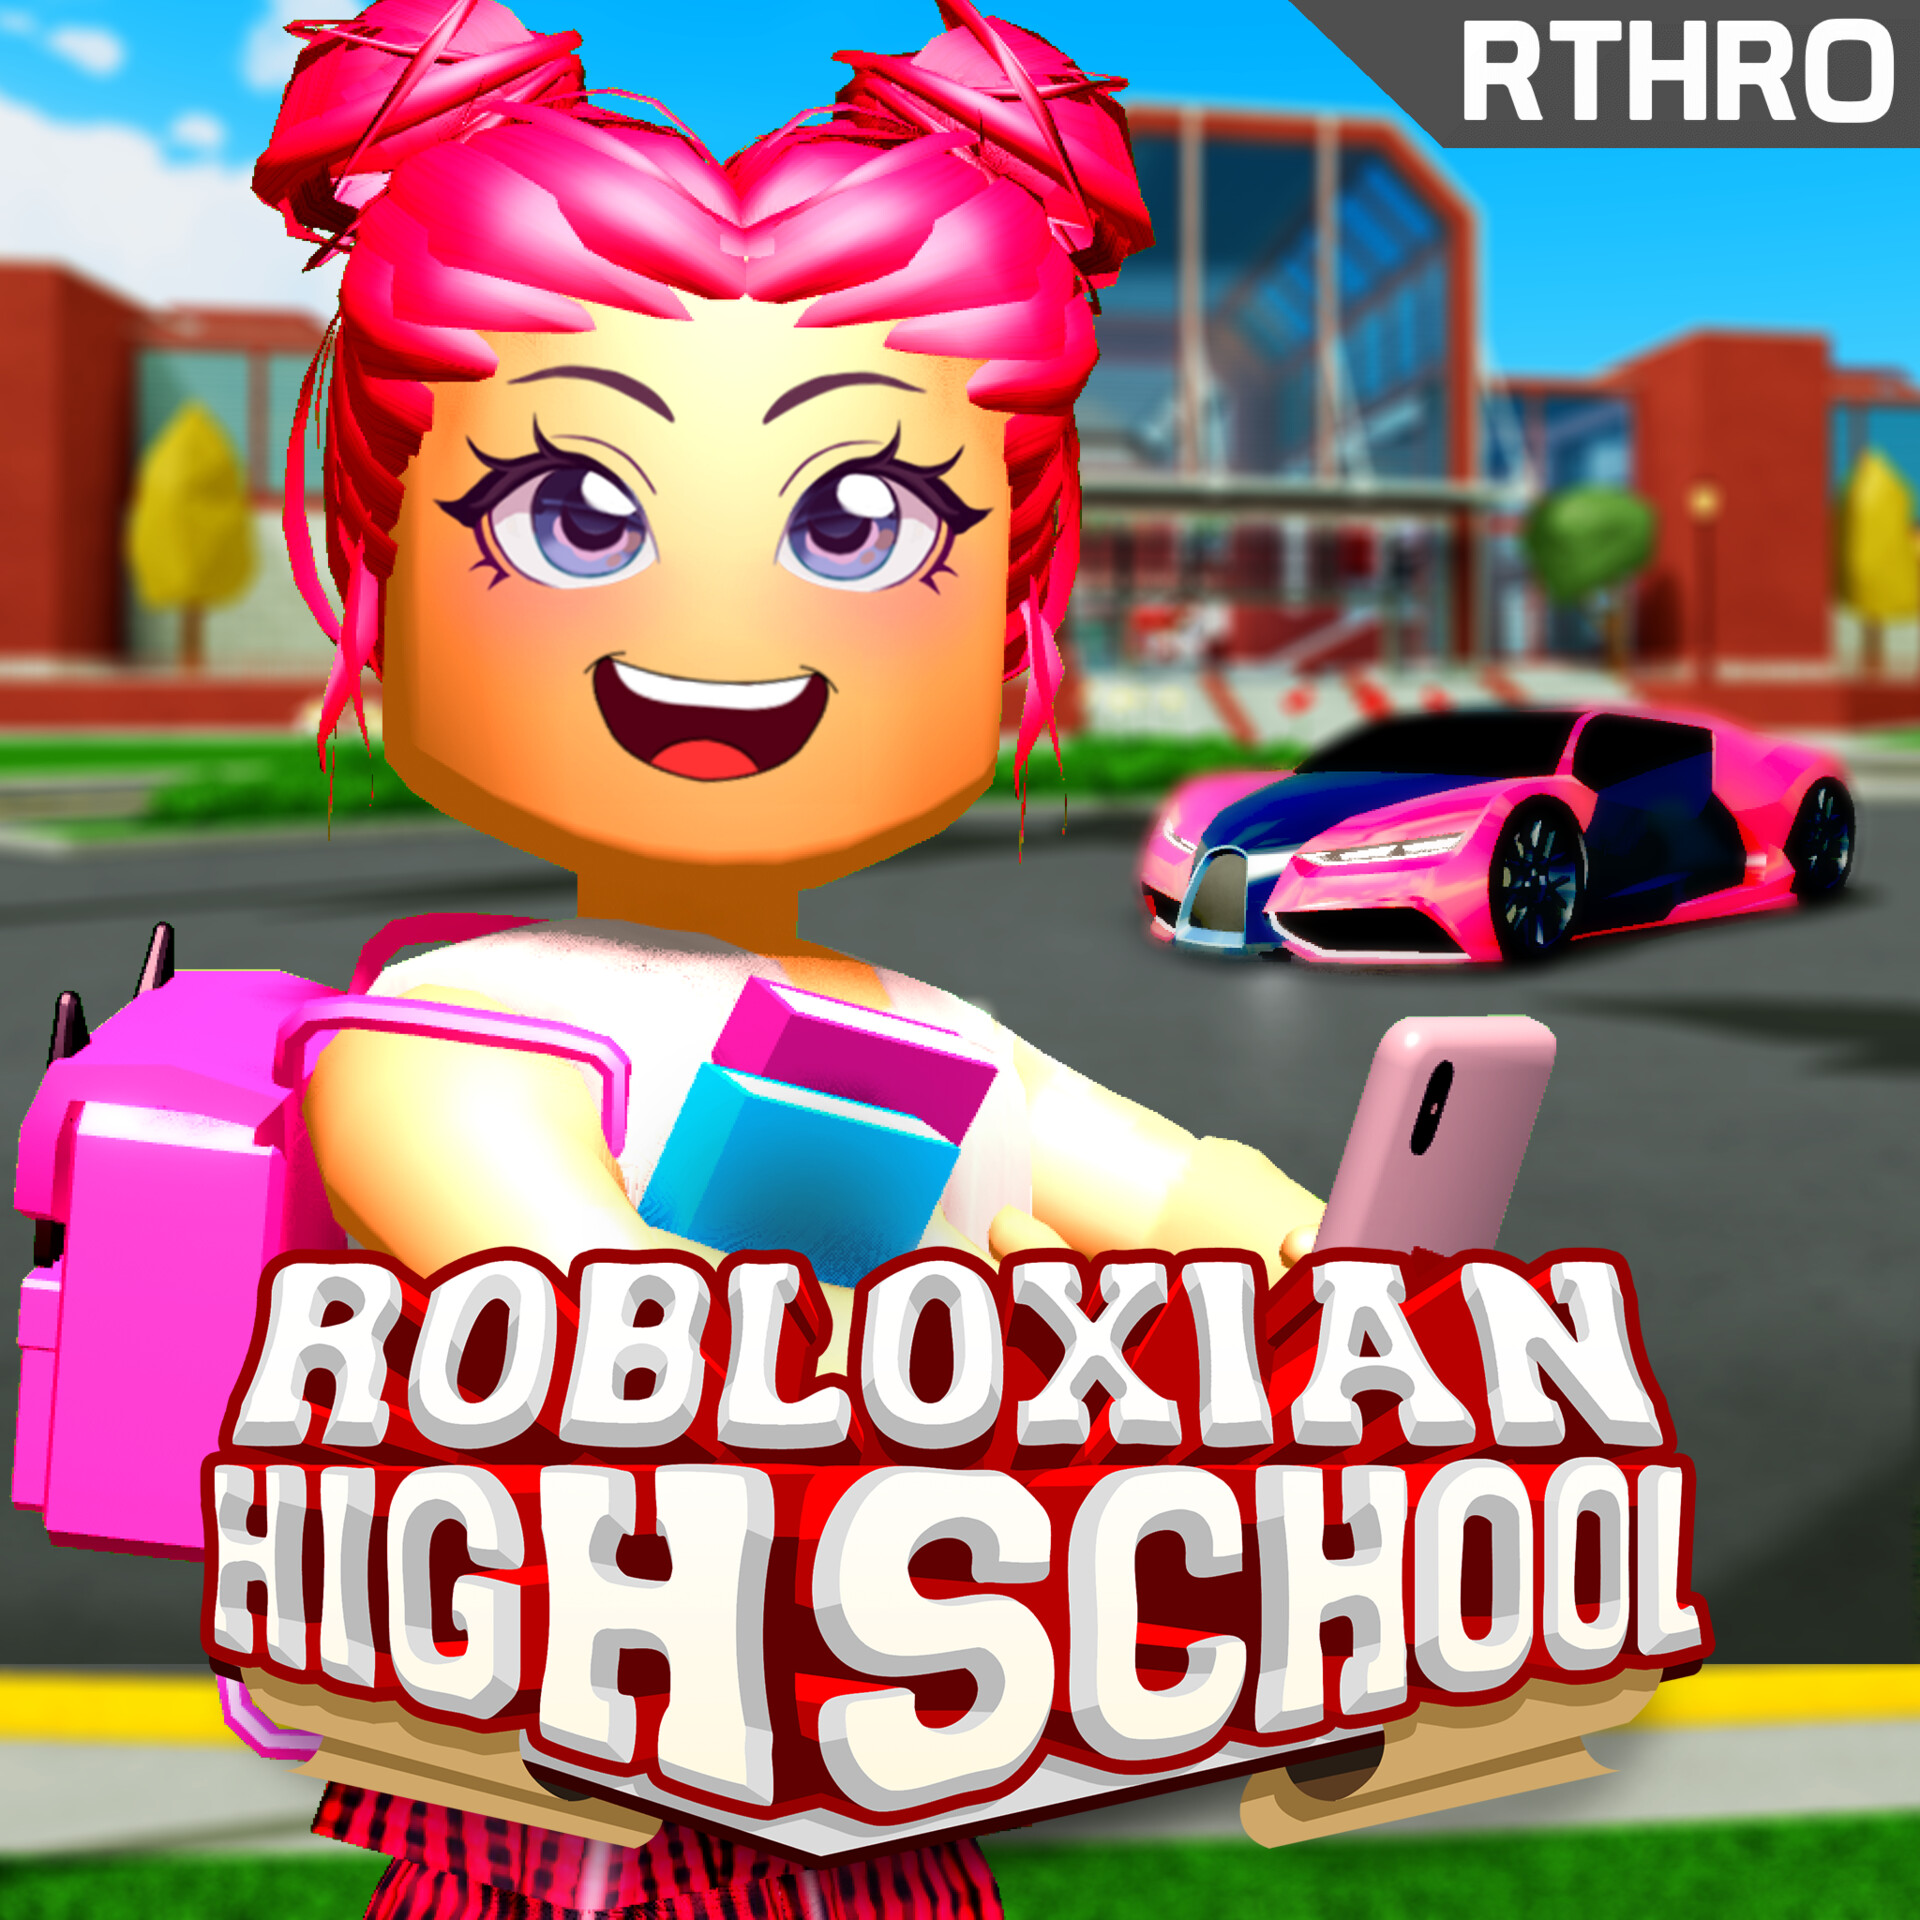 Artstation Robloxian Highschool Icons Brendan - roblox rthro icon